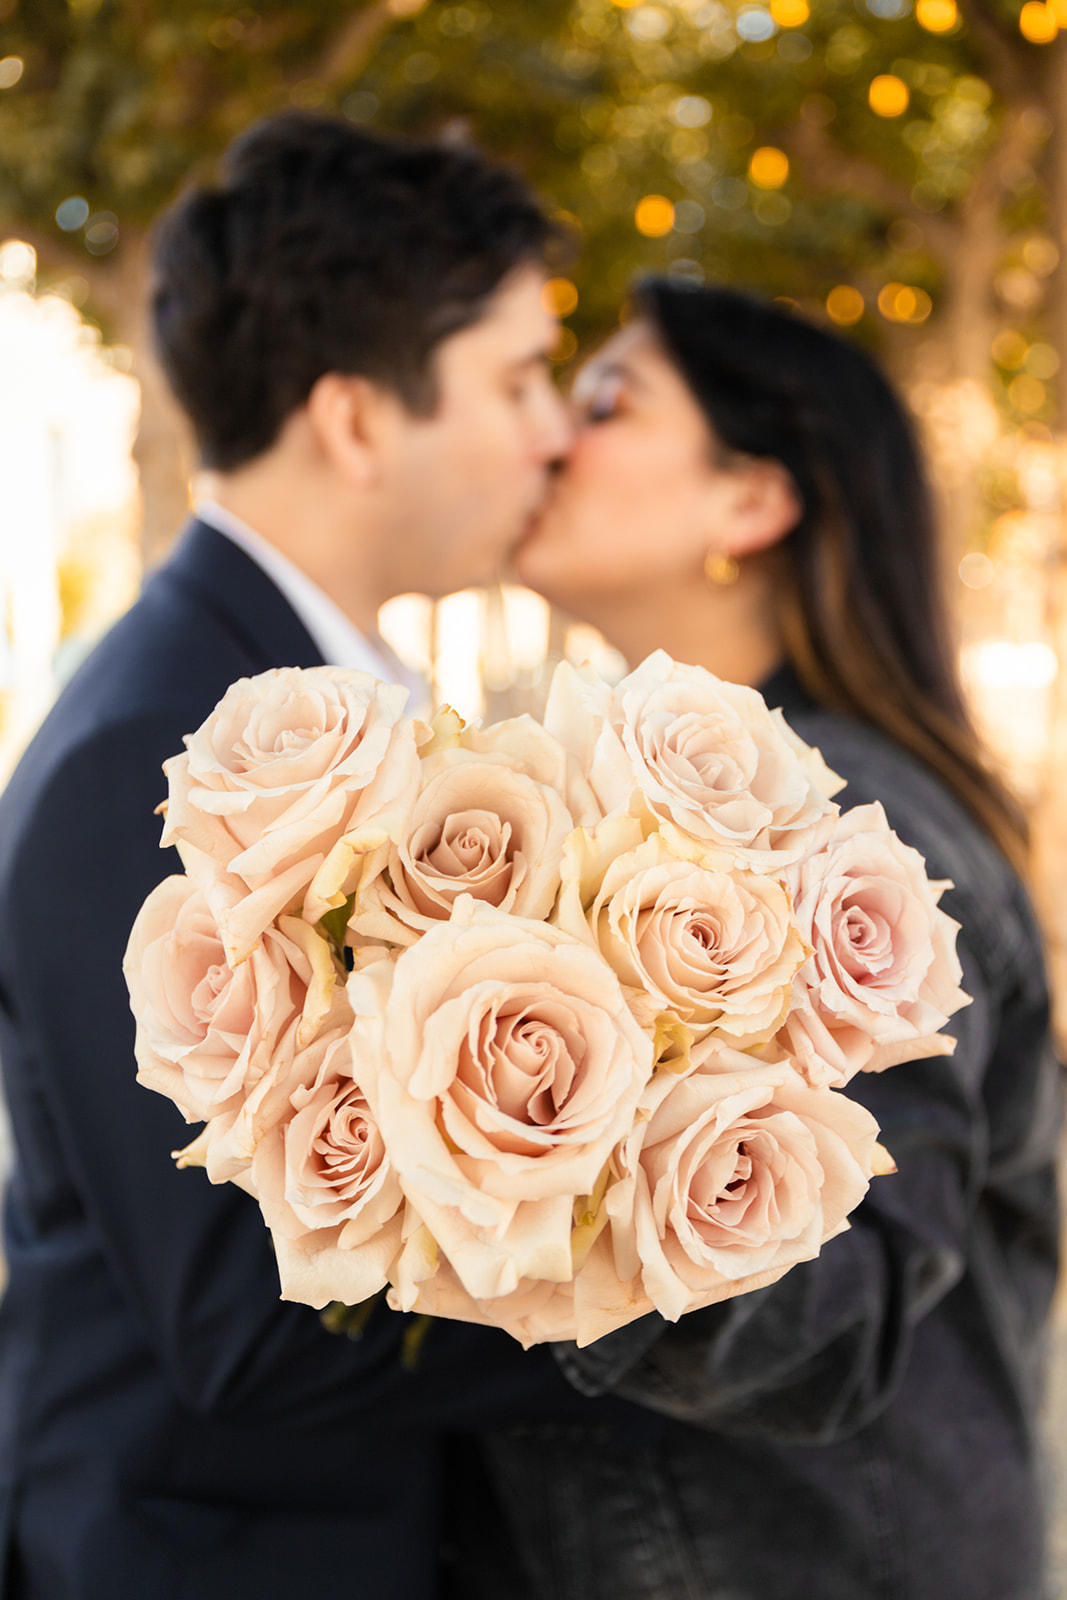 couple kiss bouquet in focus